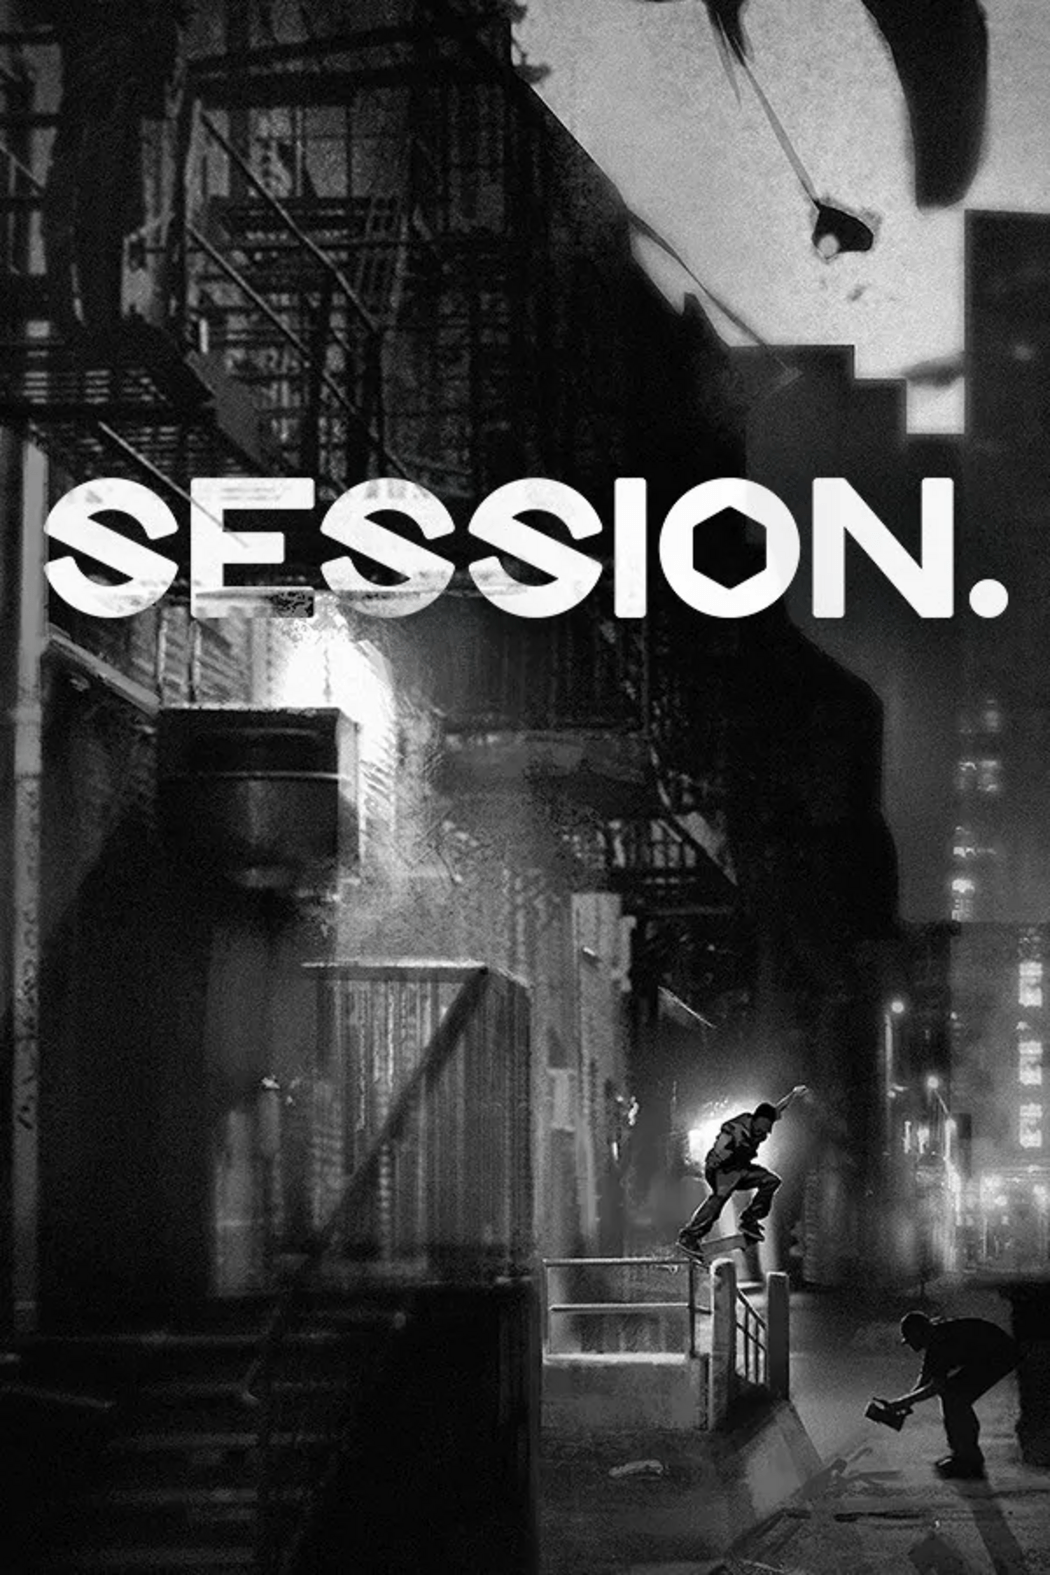 Session Skate Sim Free Download